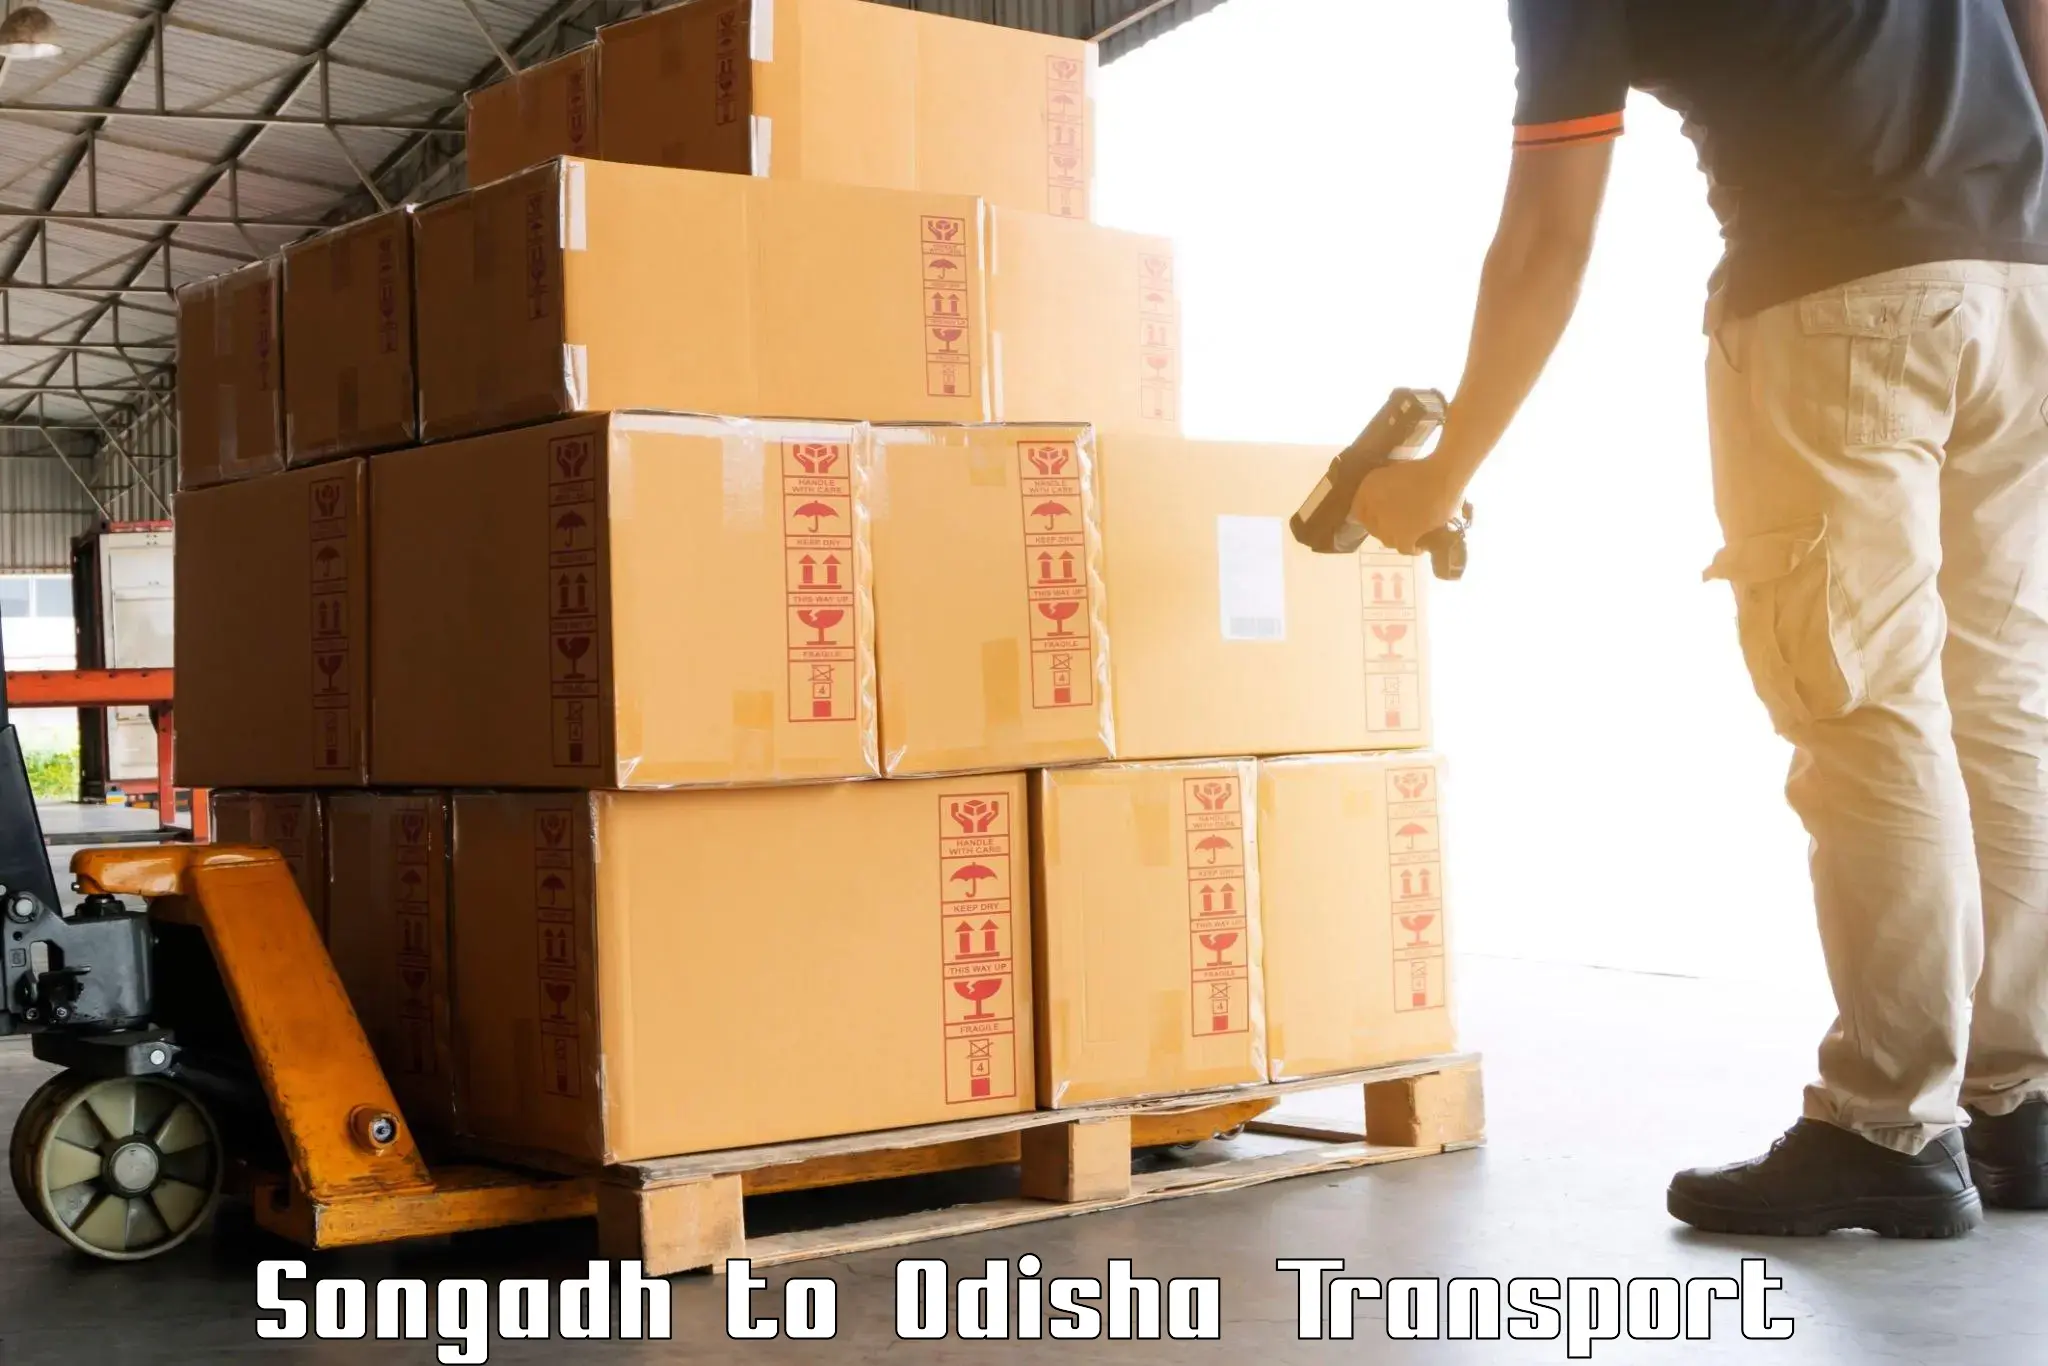 Bike transfer in Songadh to Dandisahi